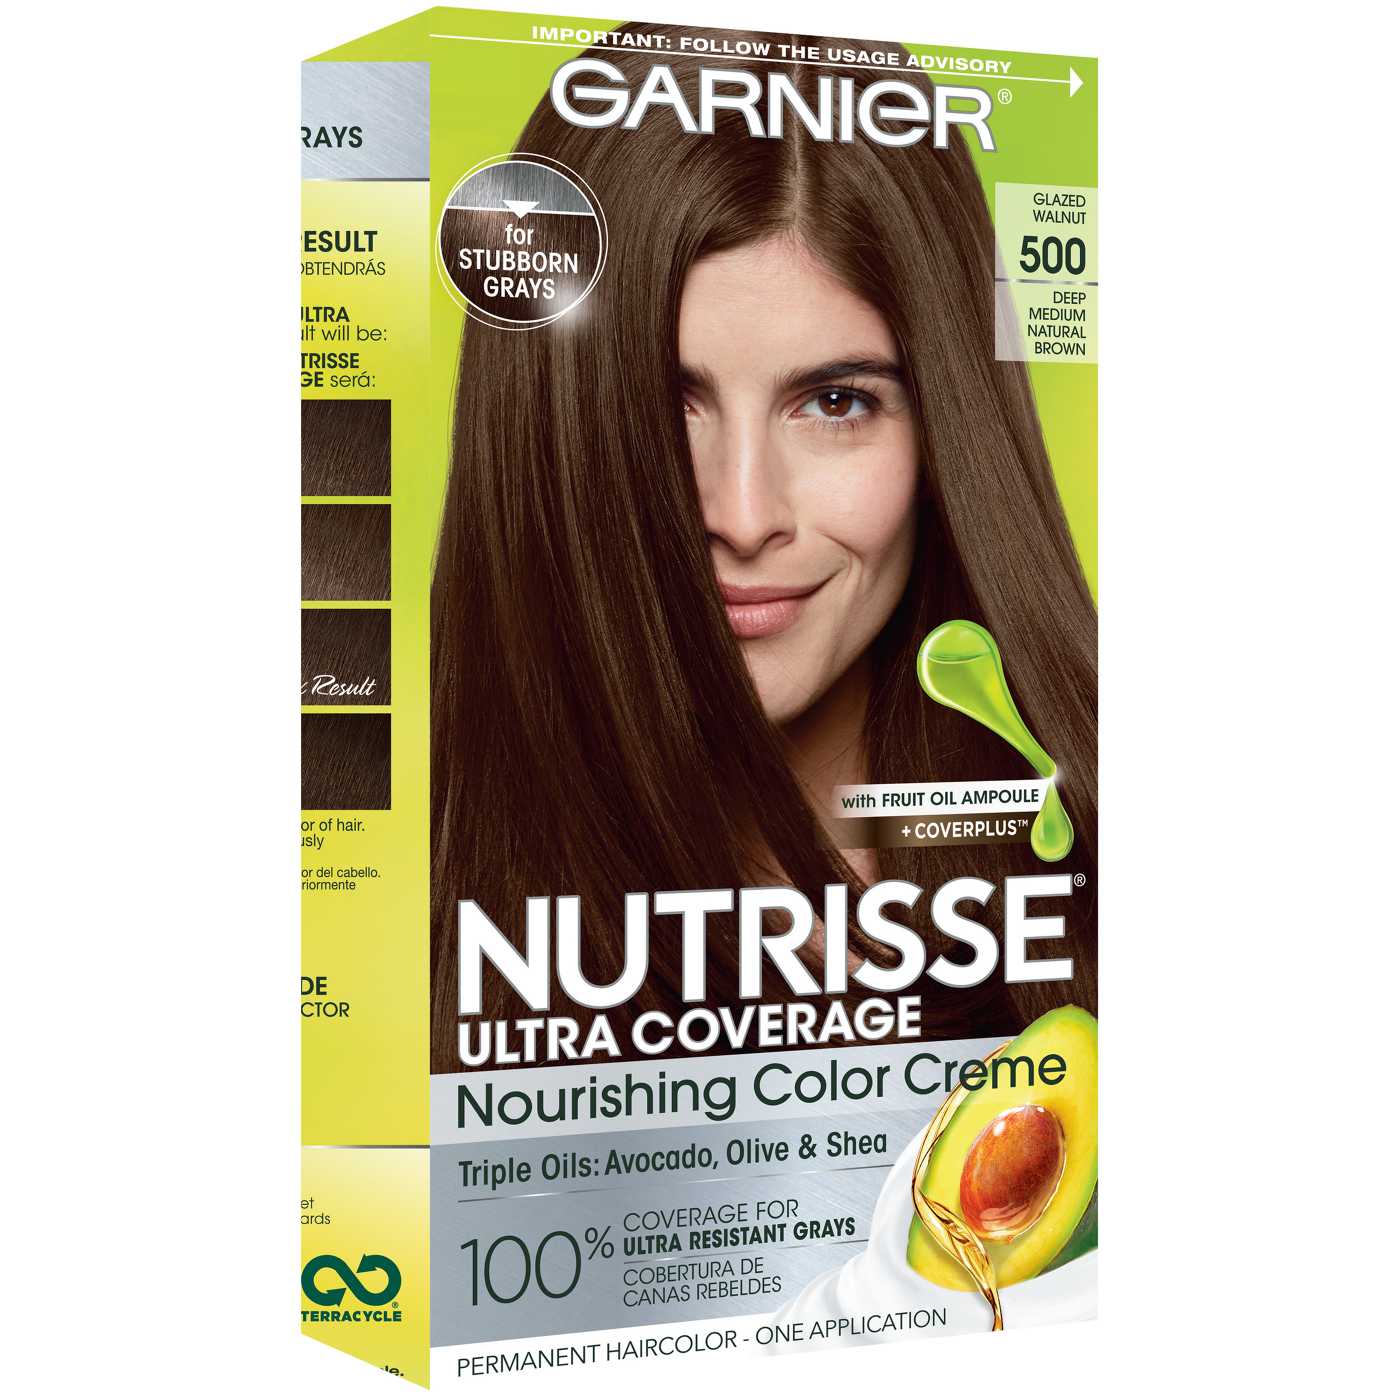 Garnier Nutrisse Ultra Coverage Nourishing Permanent Hair Color Creme for Stubborn Gray Coverage Deep Medium Natural Brown (Glazed Walnut) 500; image 1 of 3